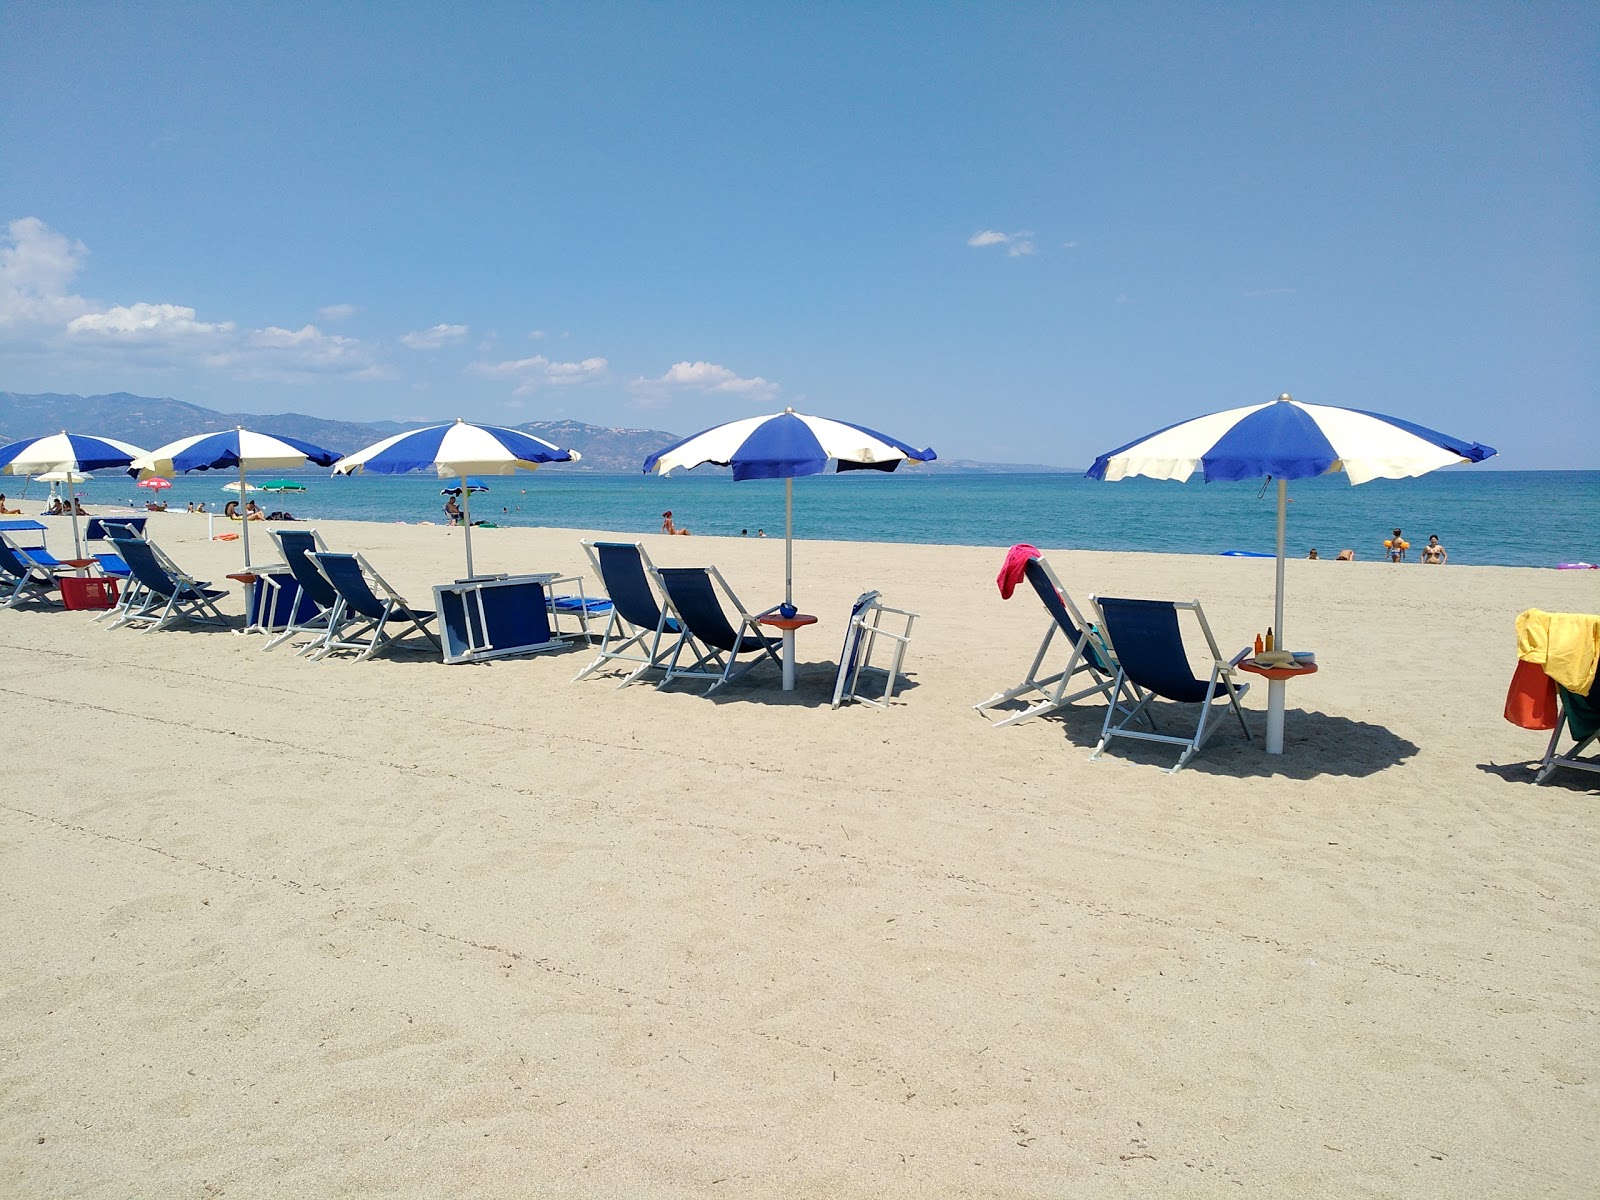 Spiaggia dei Laghi'in fotoğrafı geniş plaj ile birlikte